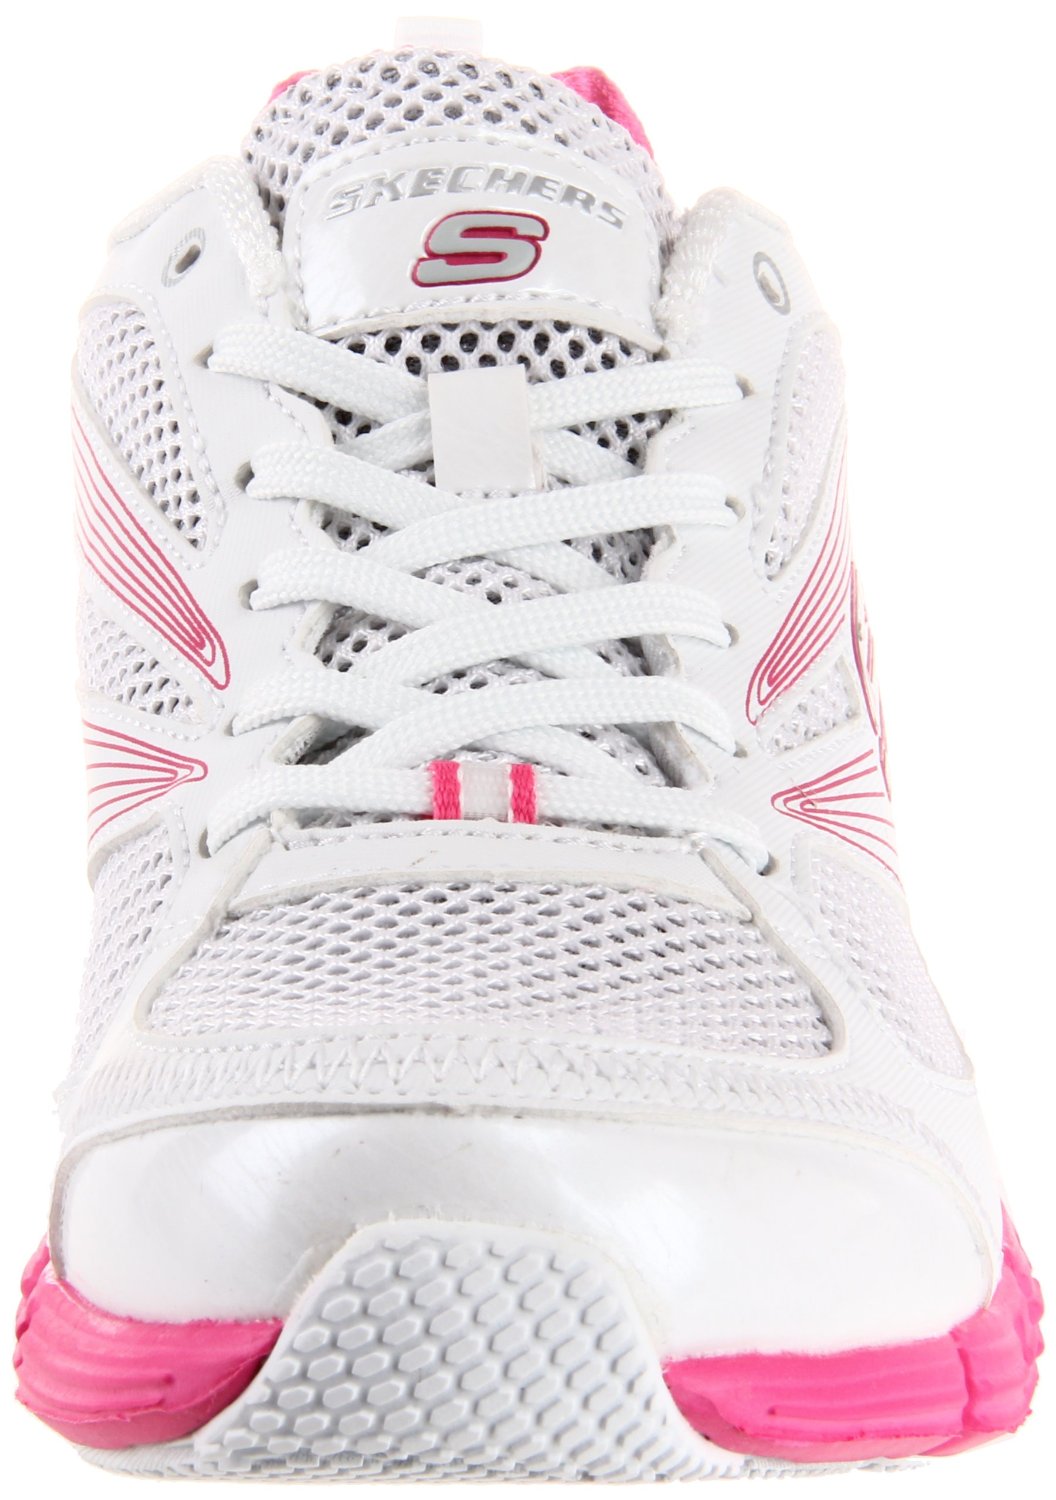 Skechers Women's Stride Fashion Sneaker White Pink Sneakers Shoes ...